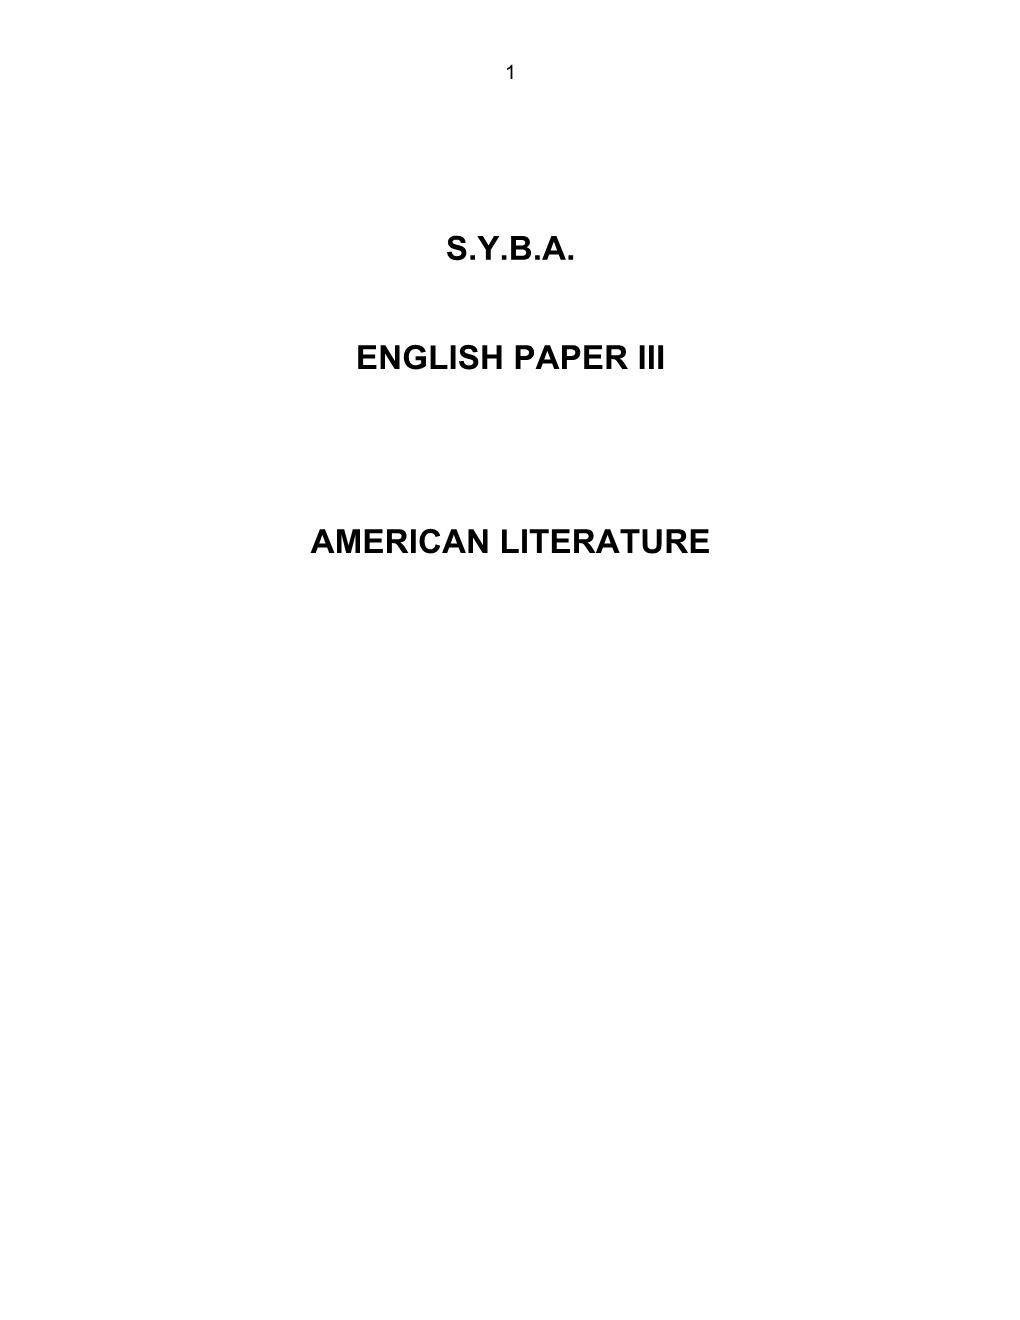 S.Y.B.A. English Paper